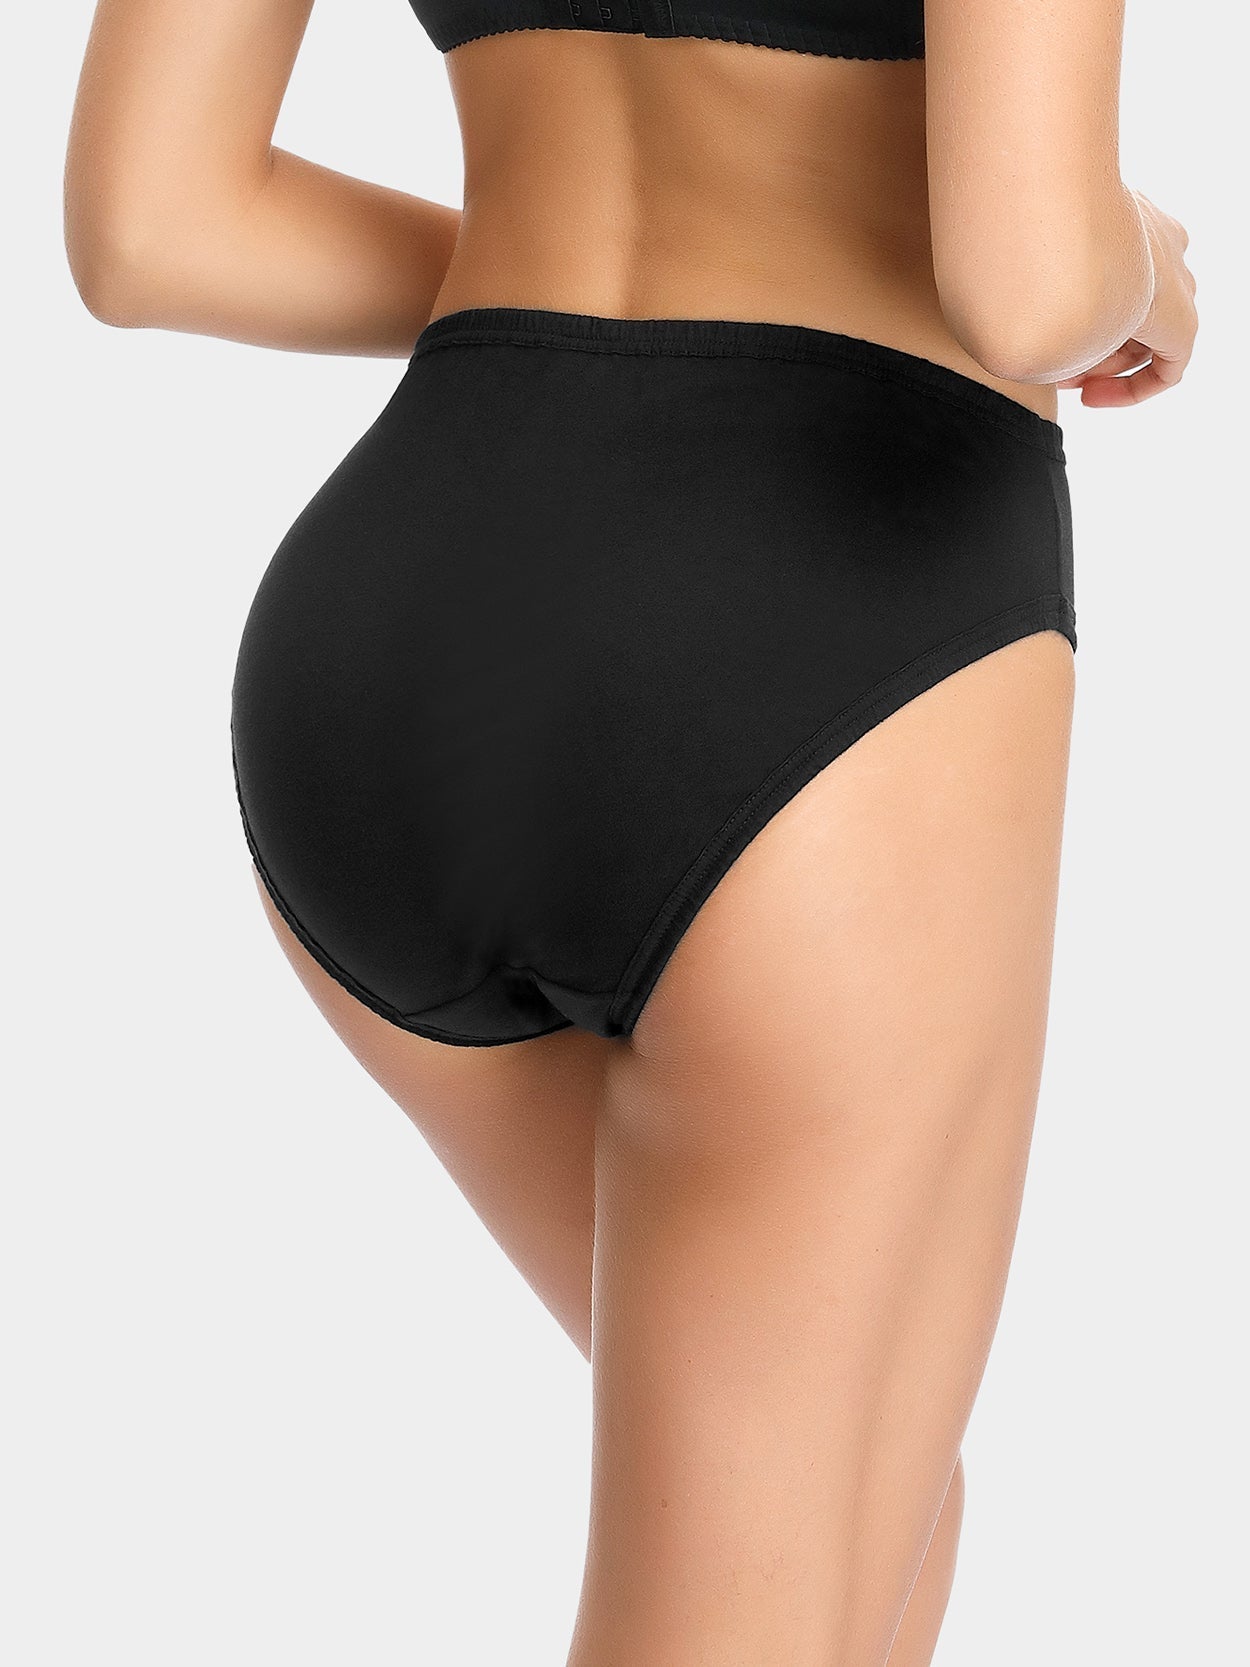 2Pcs/lot Women Plus Size Panty High Quality Briefs Sexy Underwear